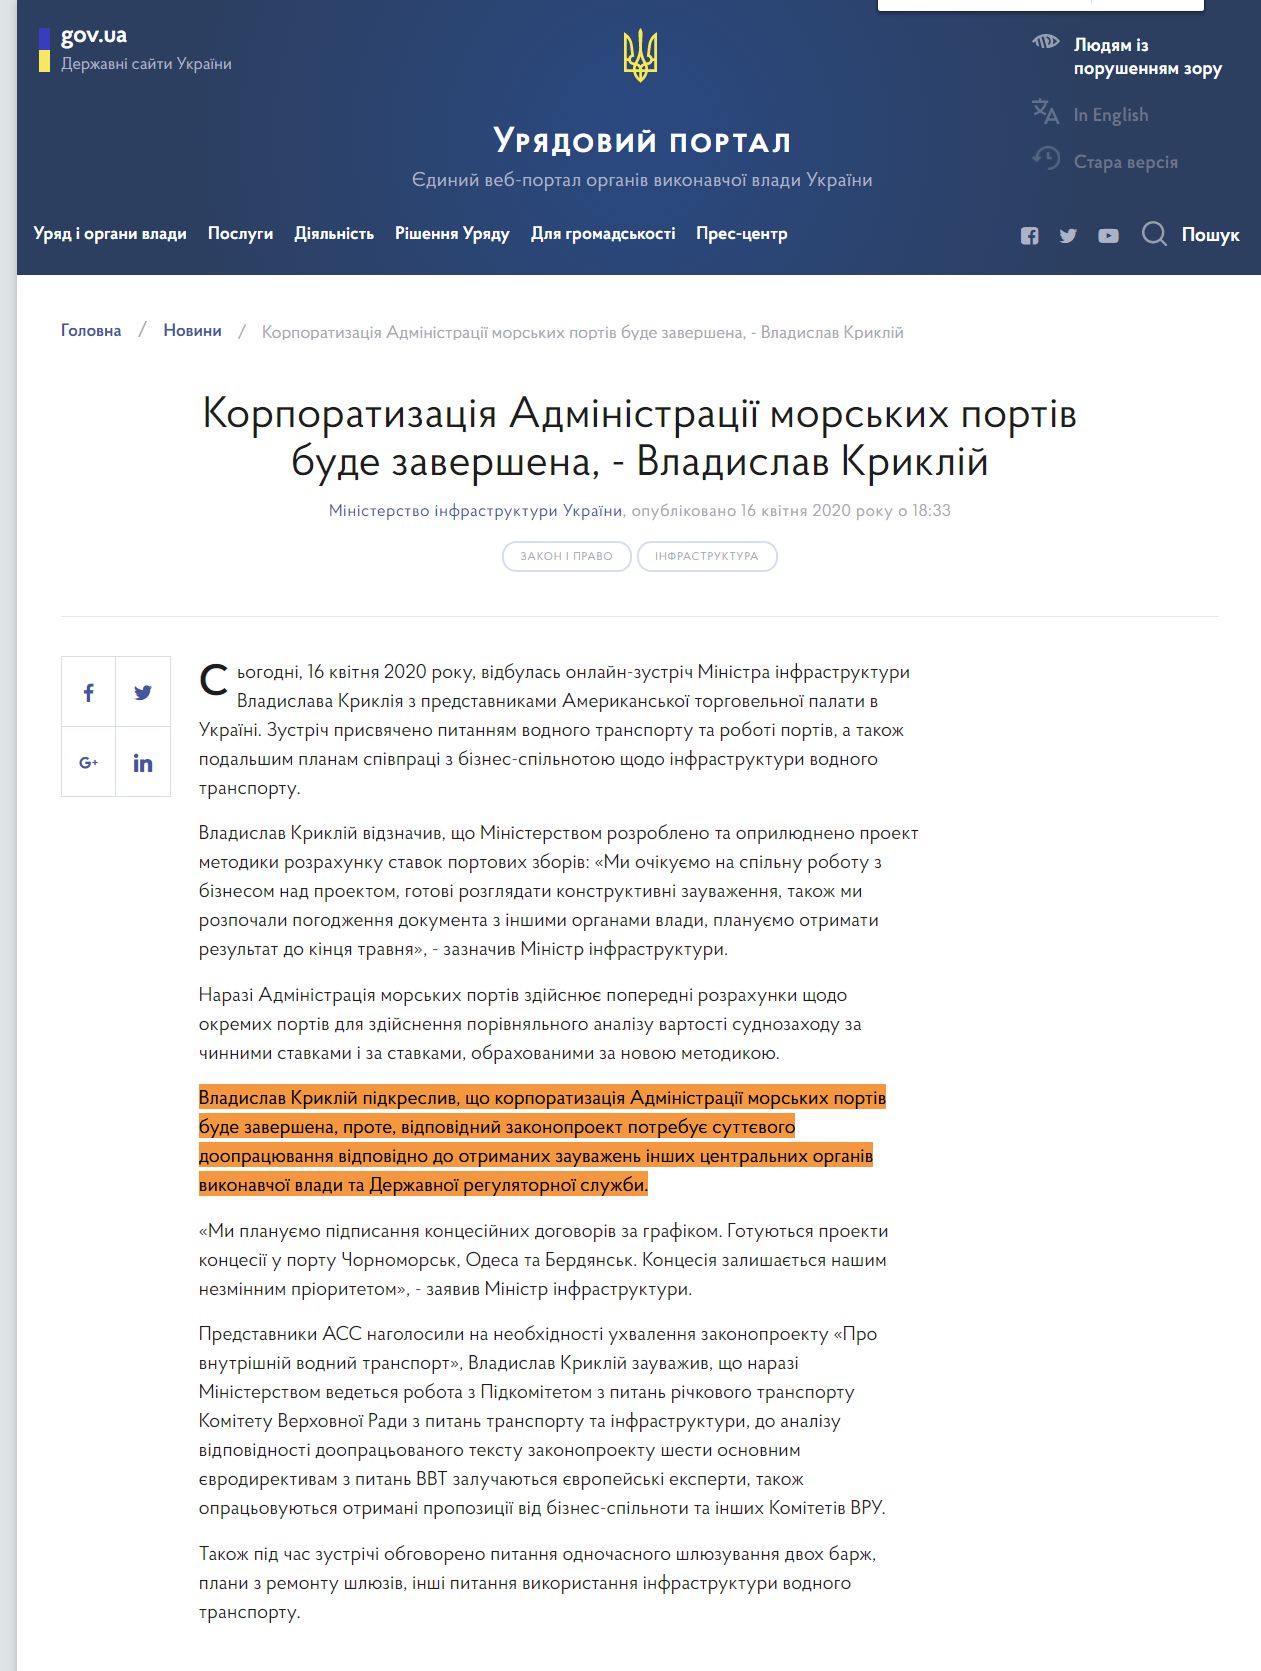 https://www.kmu.gov.ua/news/korporatizaciya-administraciyi-morskih-portiv-bude-zavershena-vladislav-kriklij